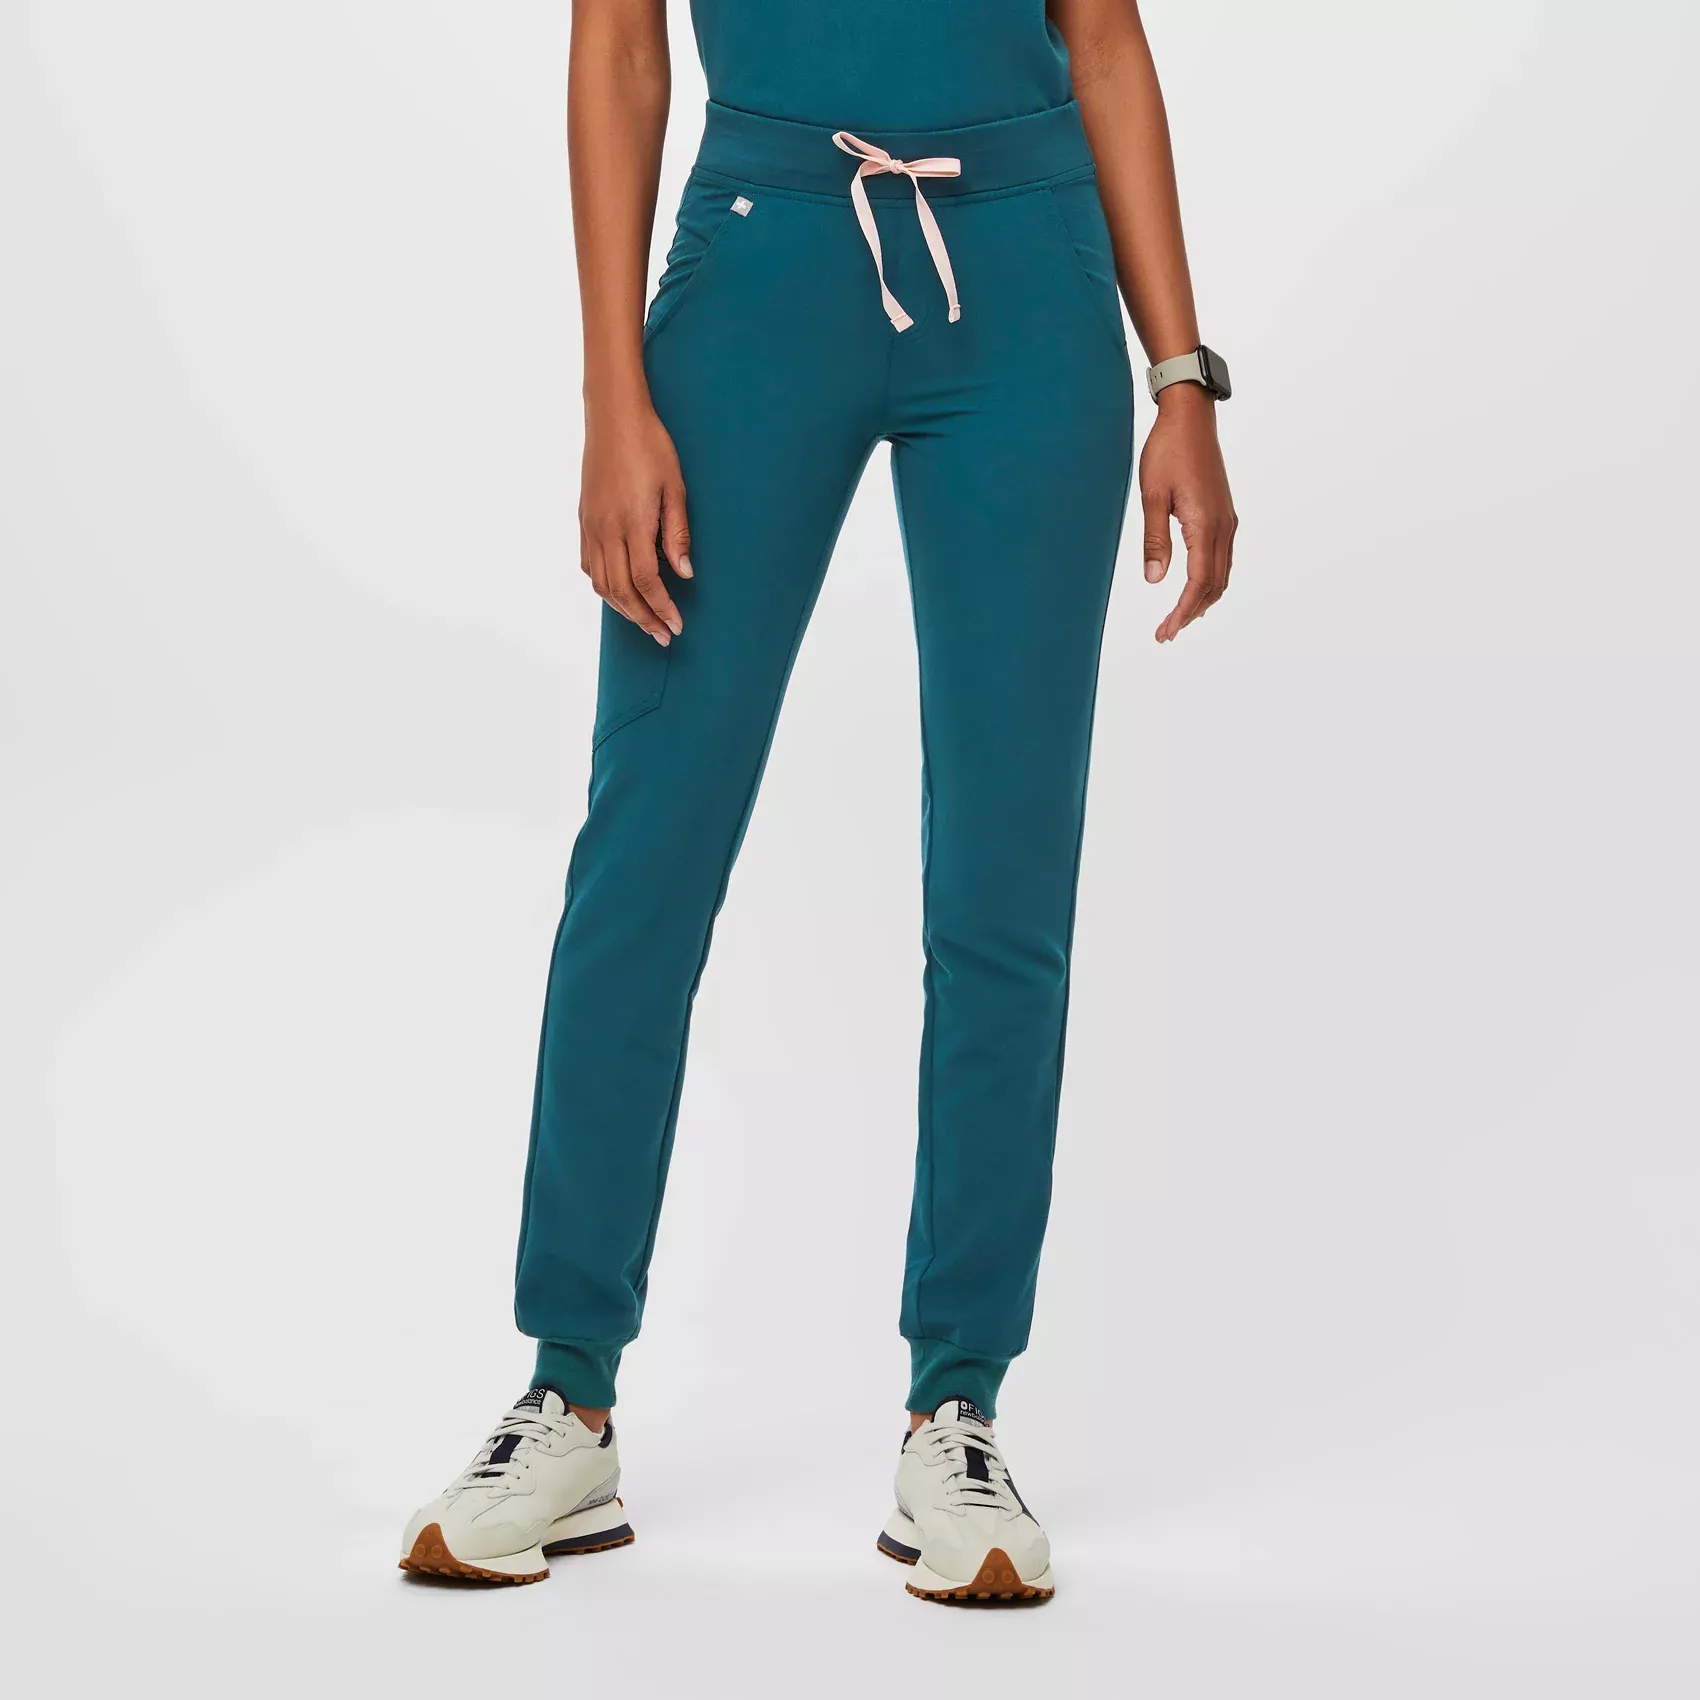 FIGS Rafaela Scrub Top (Alps Blue) - Women's Clothing & Shoes - Lexington,  South Carolina, Facebook Marketplace